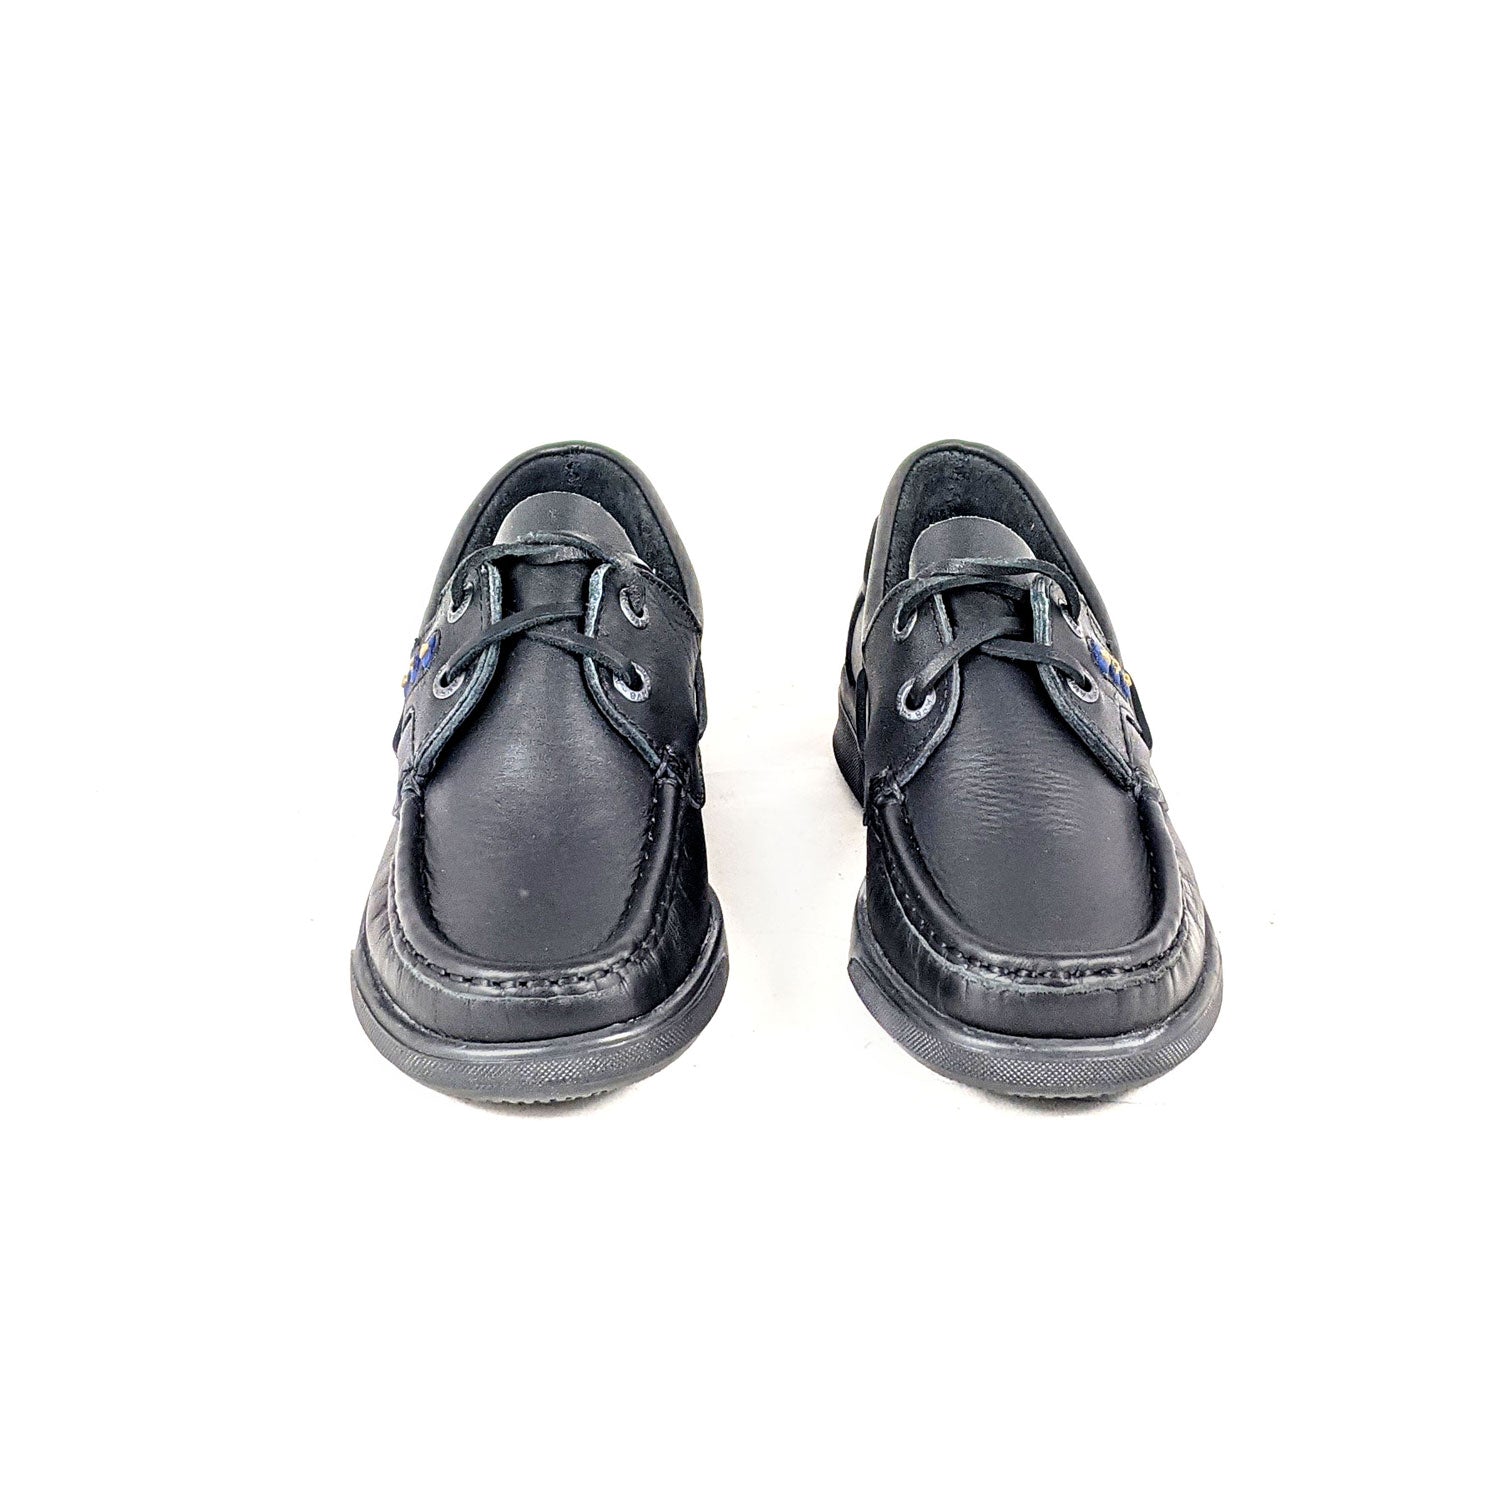 Dubarry Kapley Laced Av8 Shoe - Black 5 Shaws Department Stores